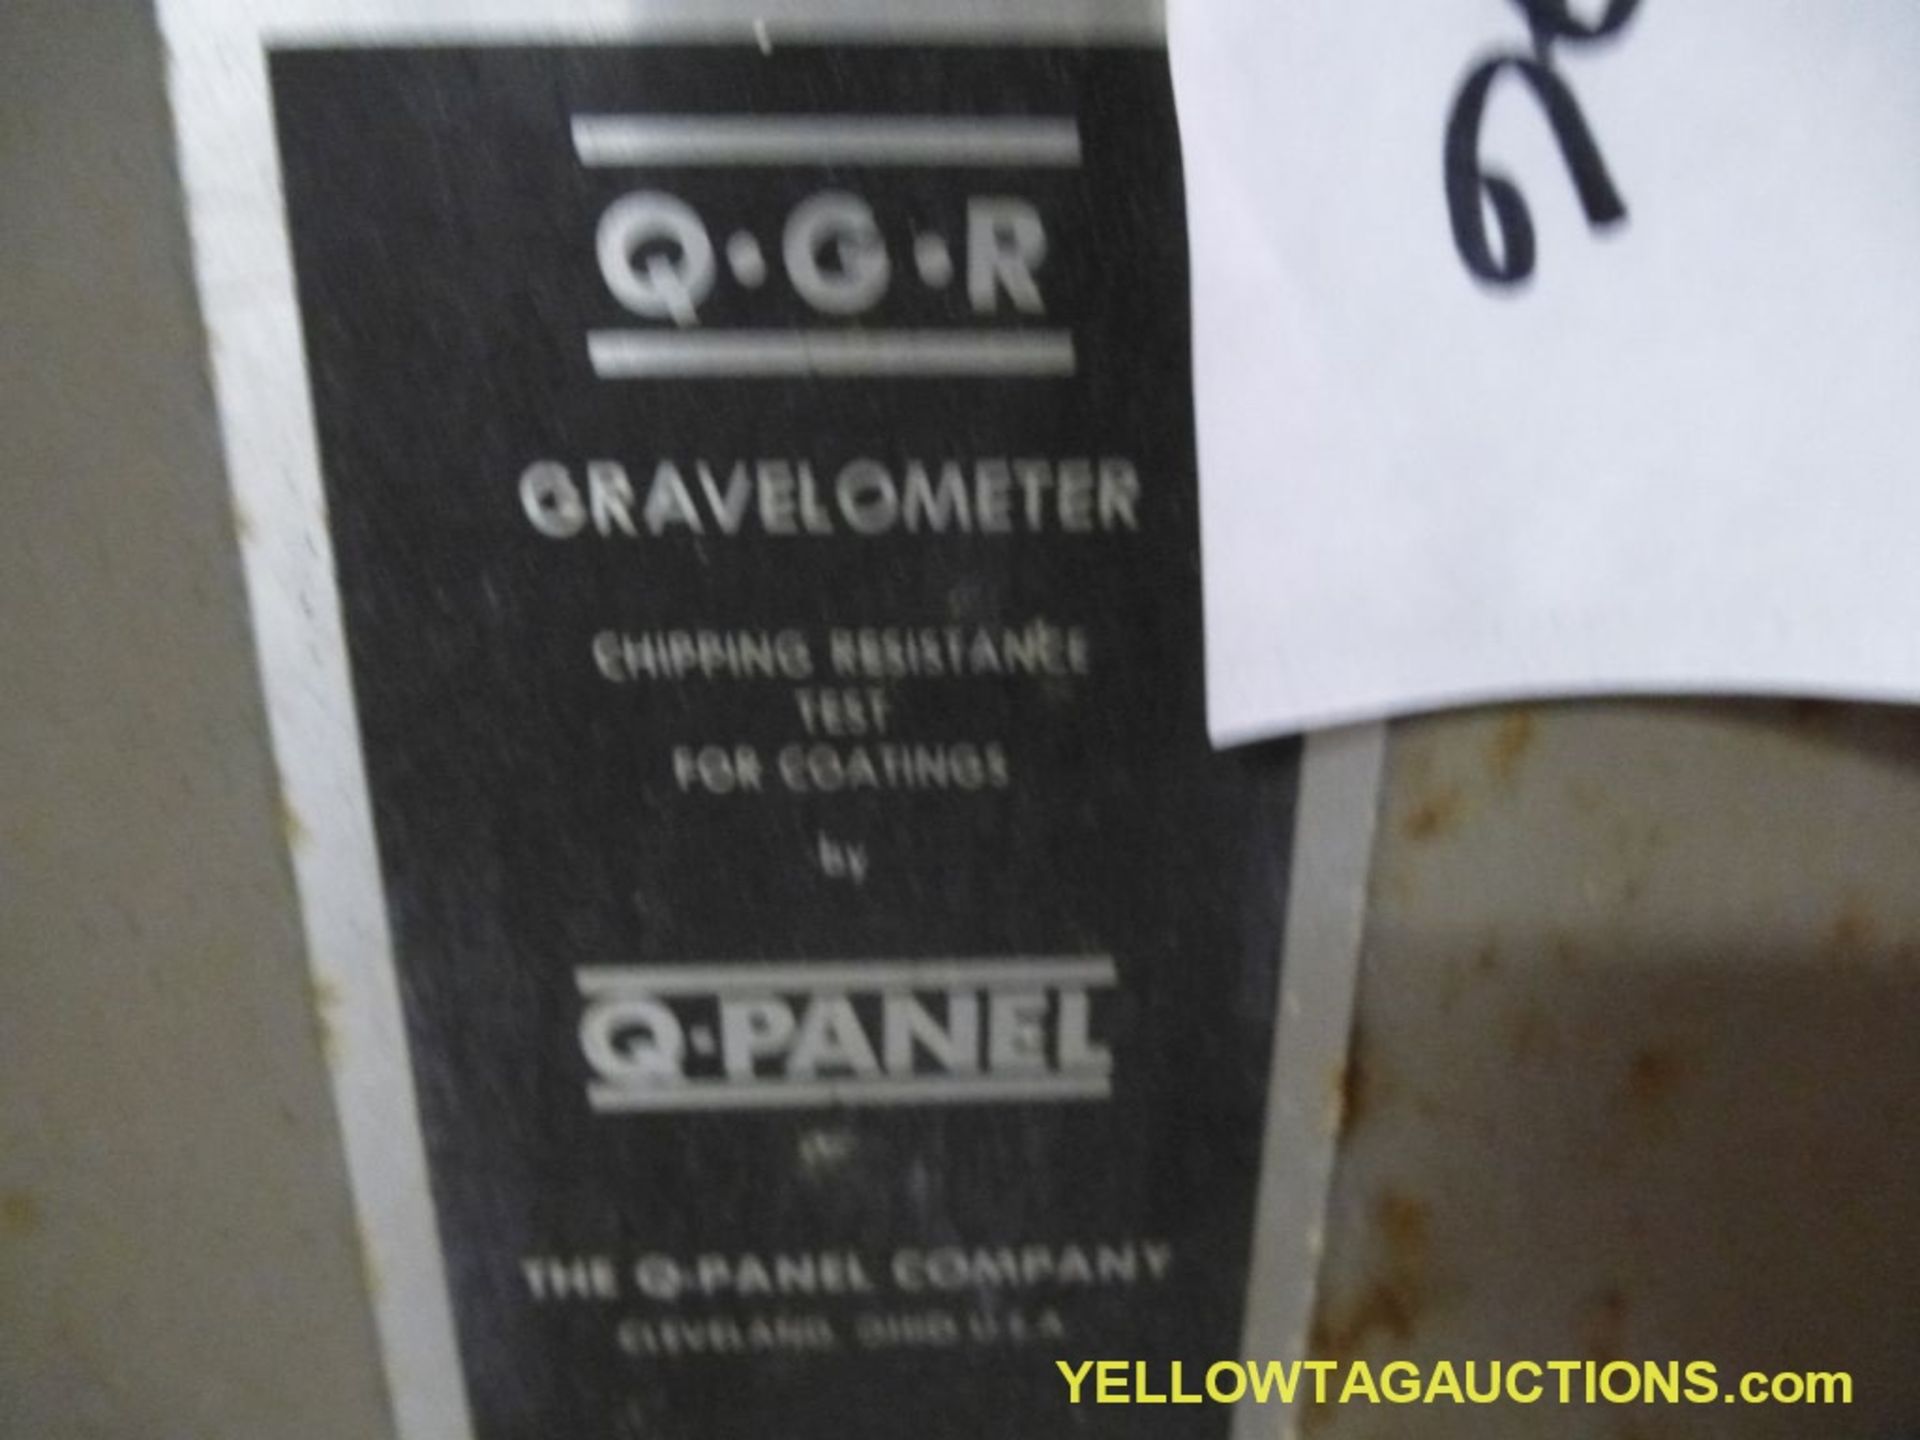 Q.G.R. Gravelometer|Location: Charlotte, NC - Image 3 of 6